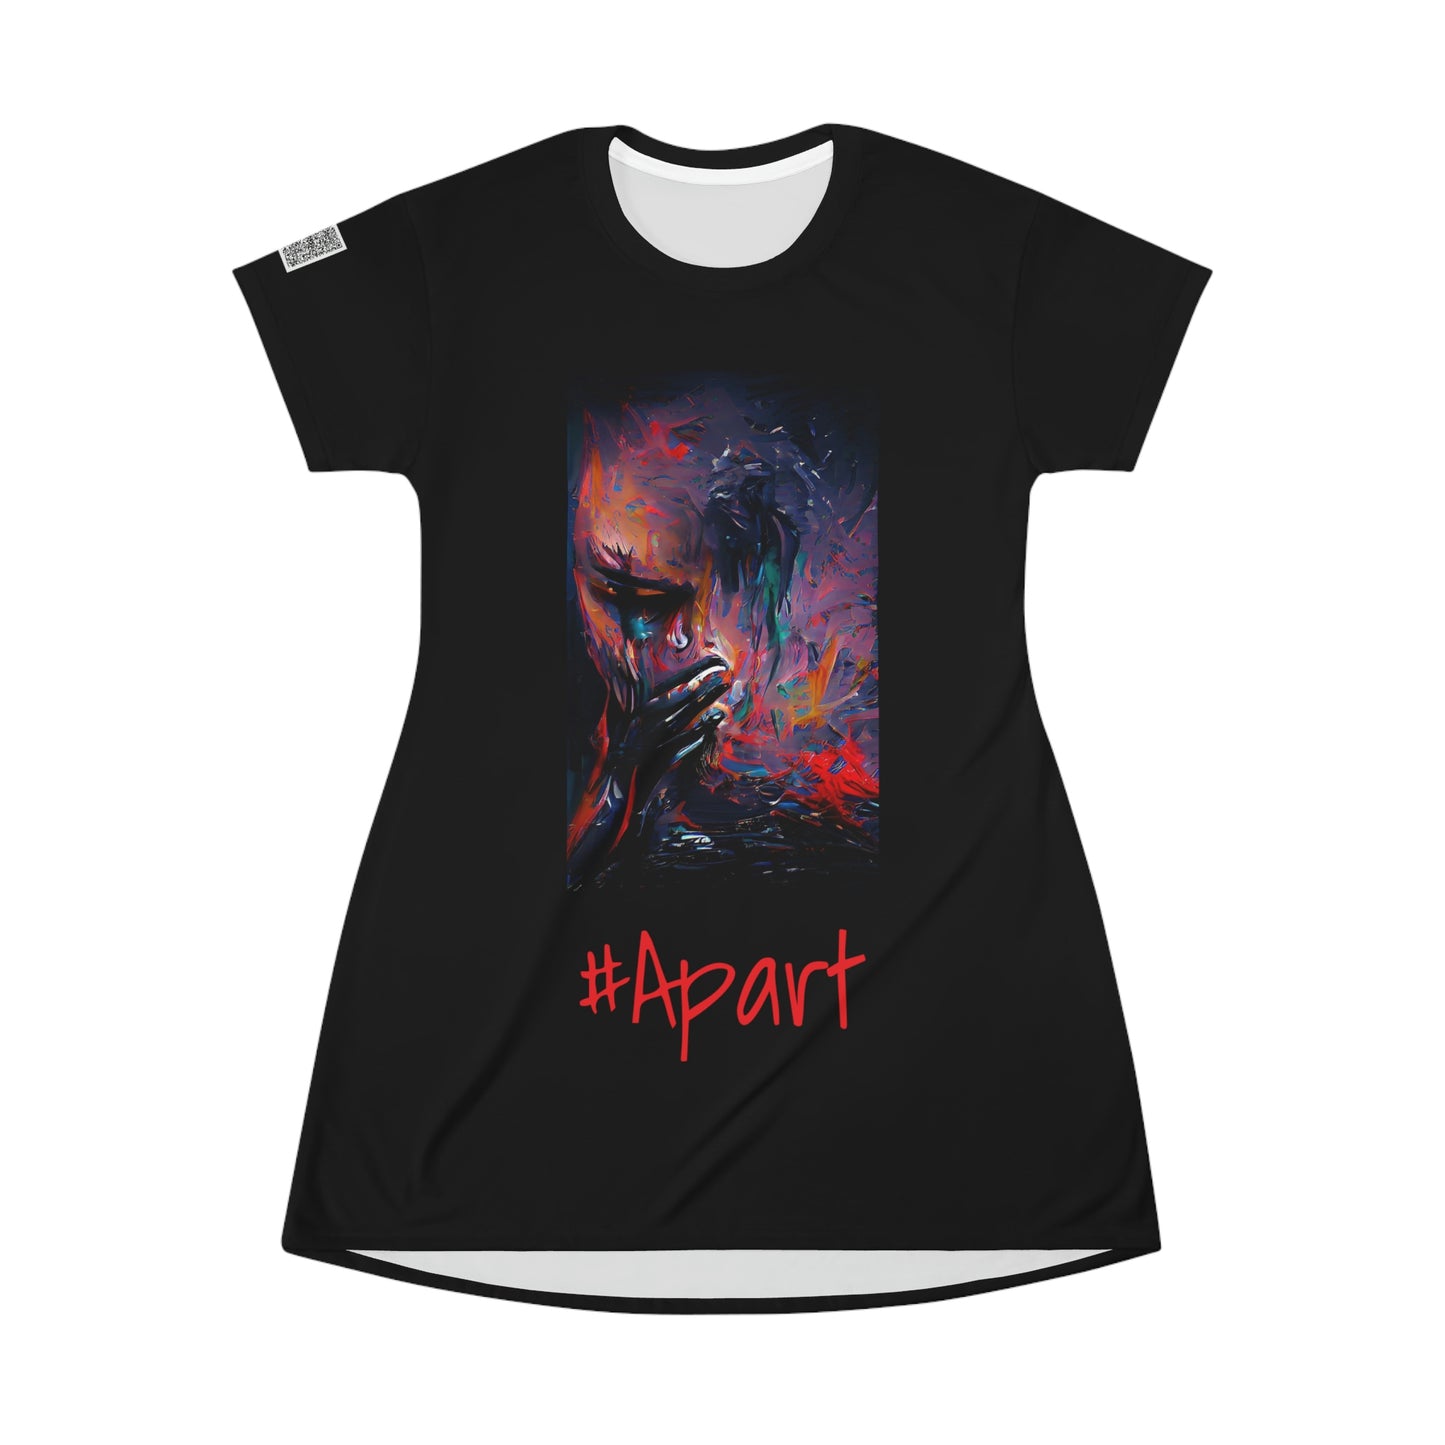 All Over Print T-Shirt Dress x #Apart NFT collection